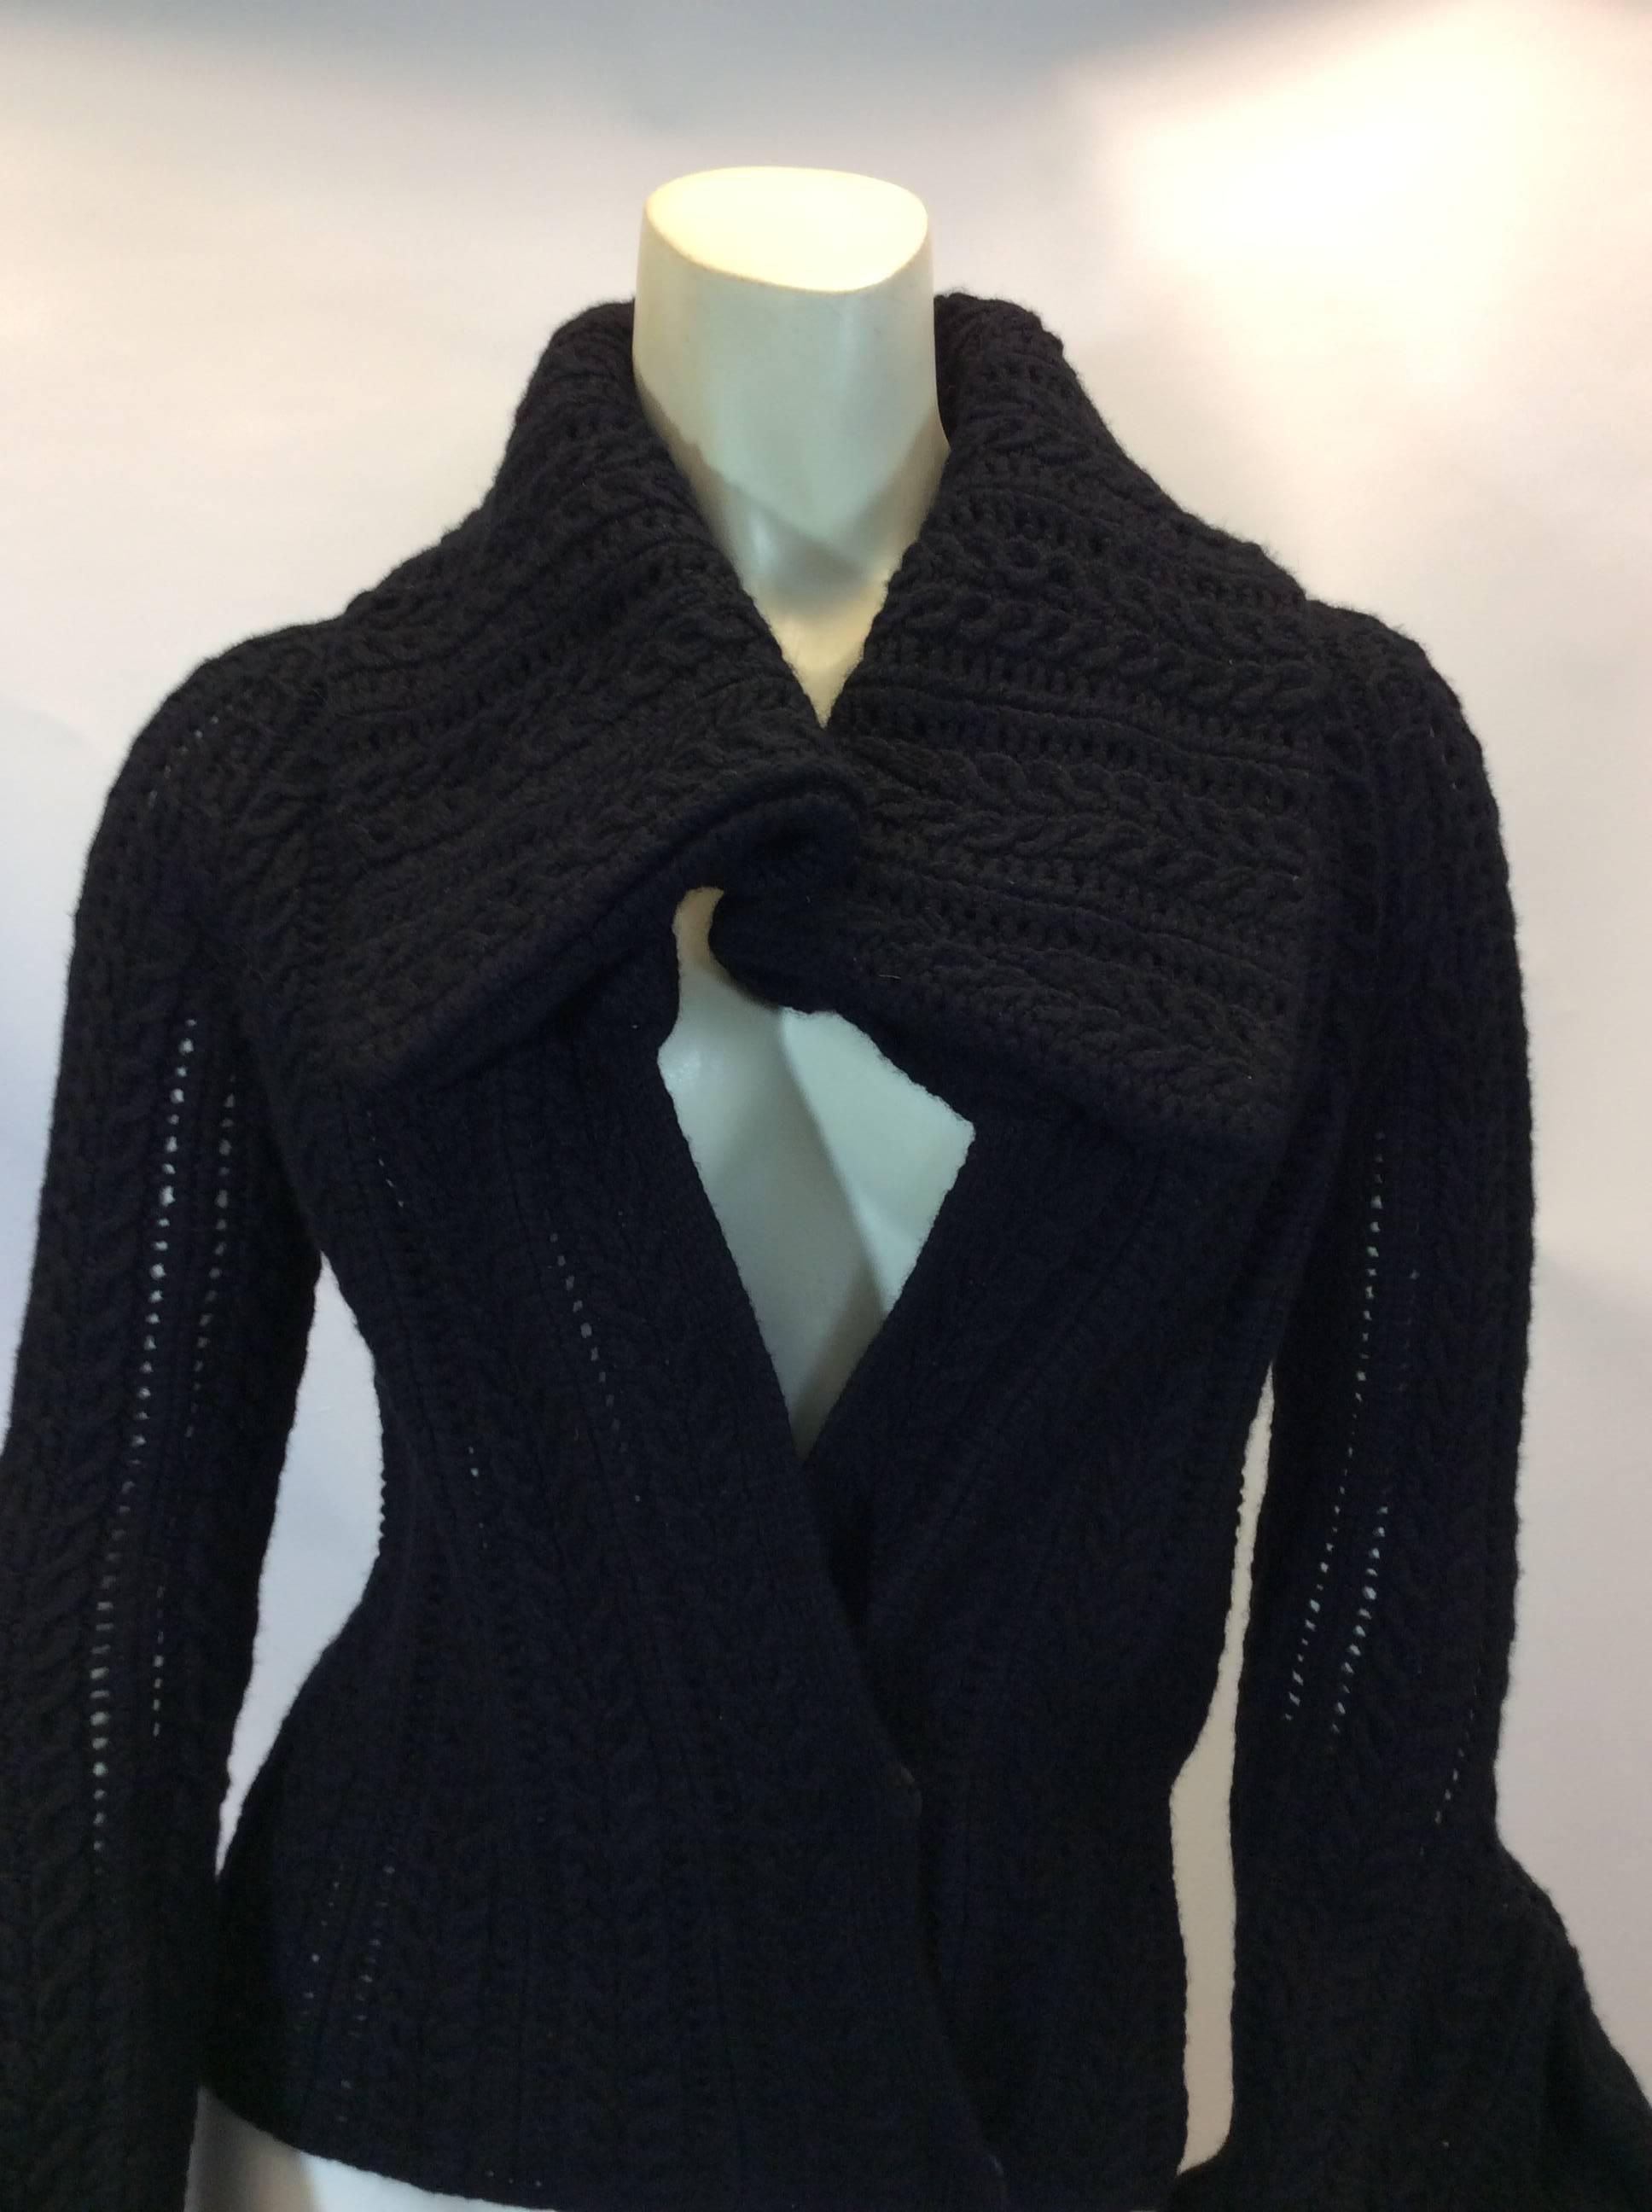 Oscar De La Renta Black Cashmere NWT Sweater
100% Cashmere
NWT
Size medium
$450
Bell sleeve style
Snap closures 

